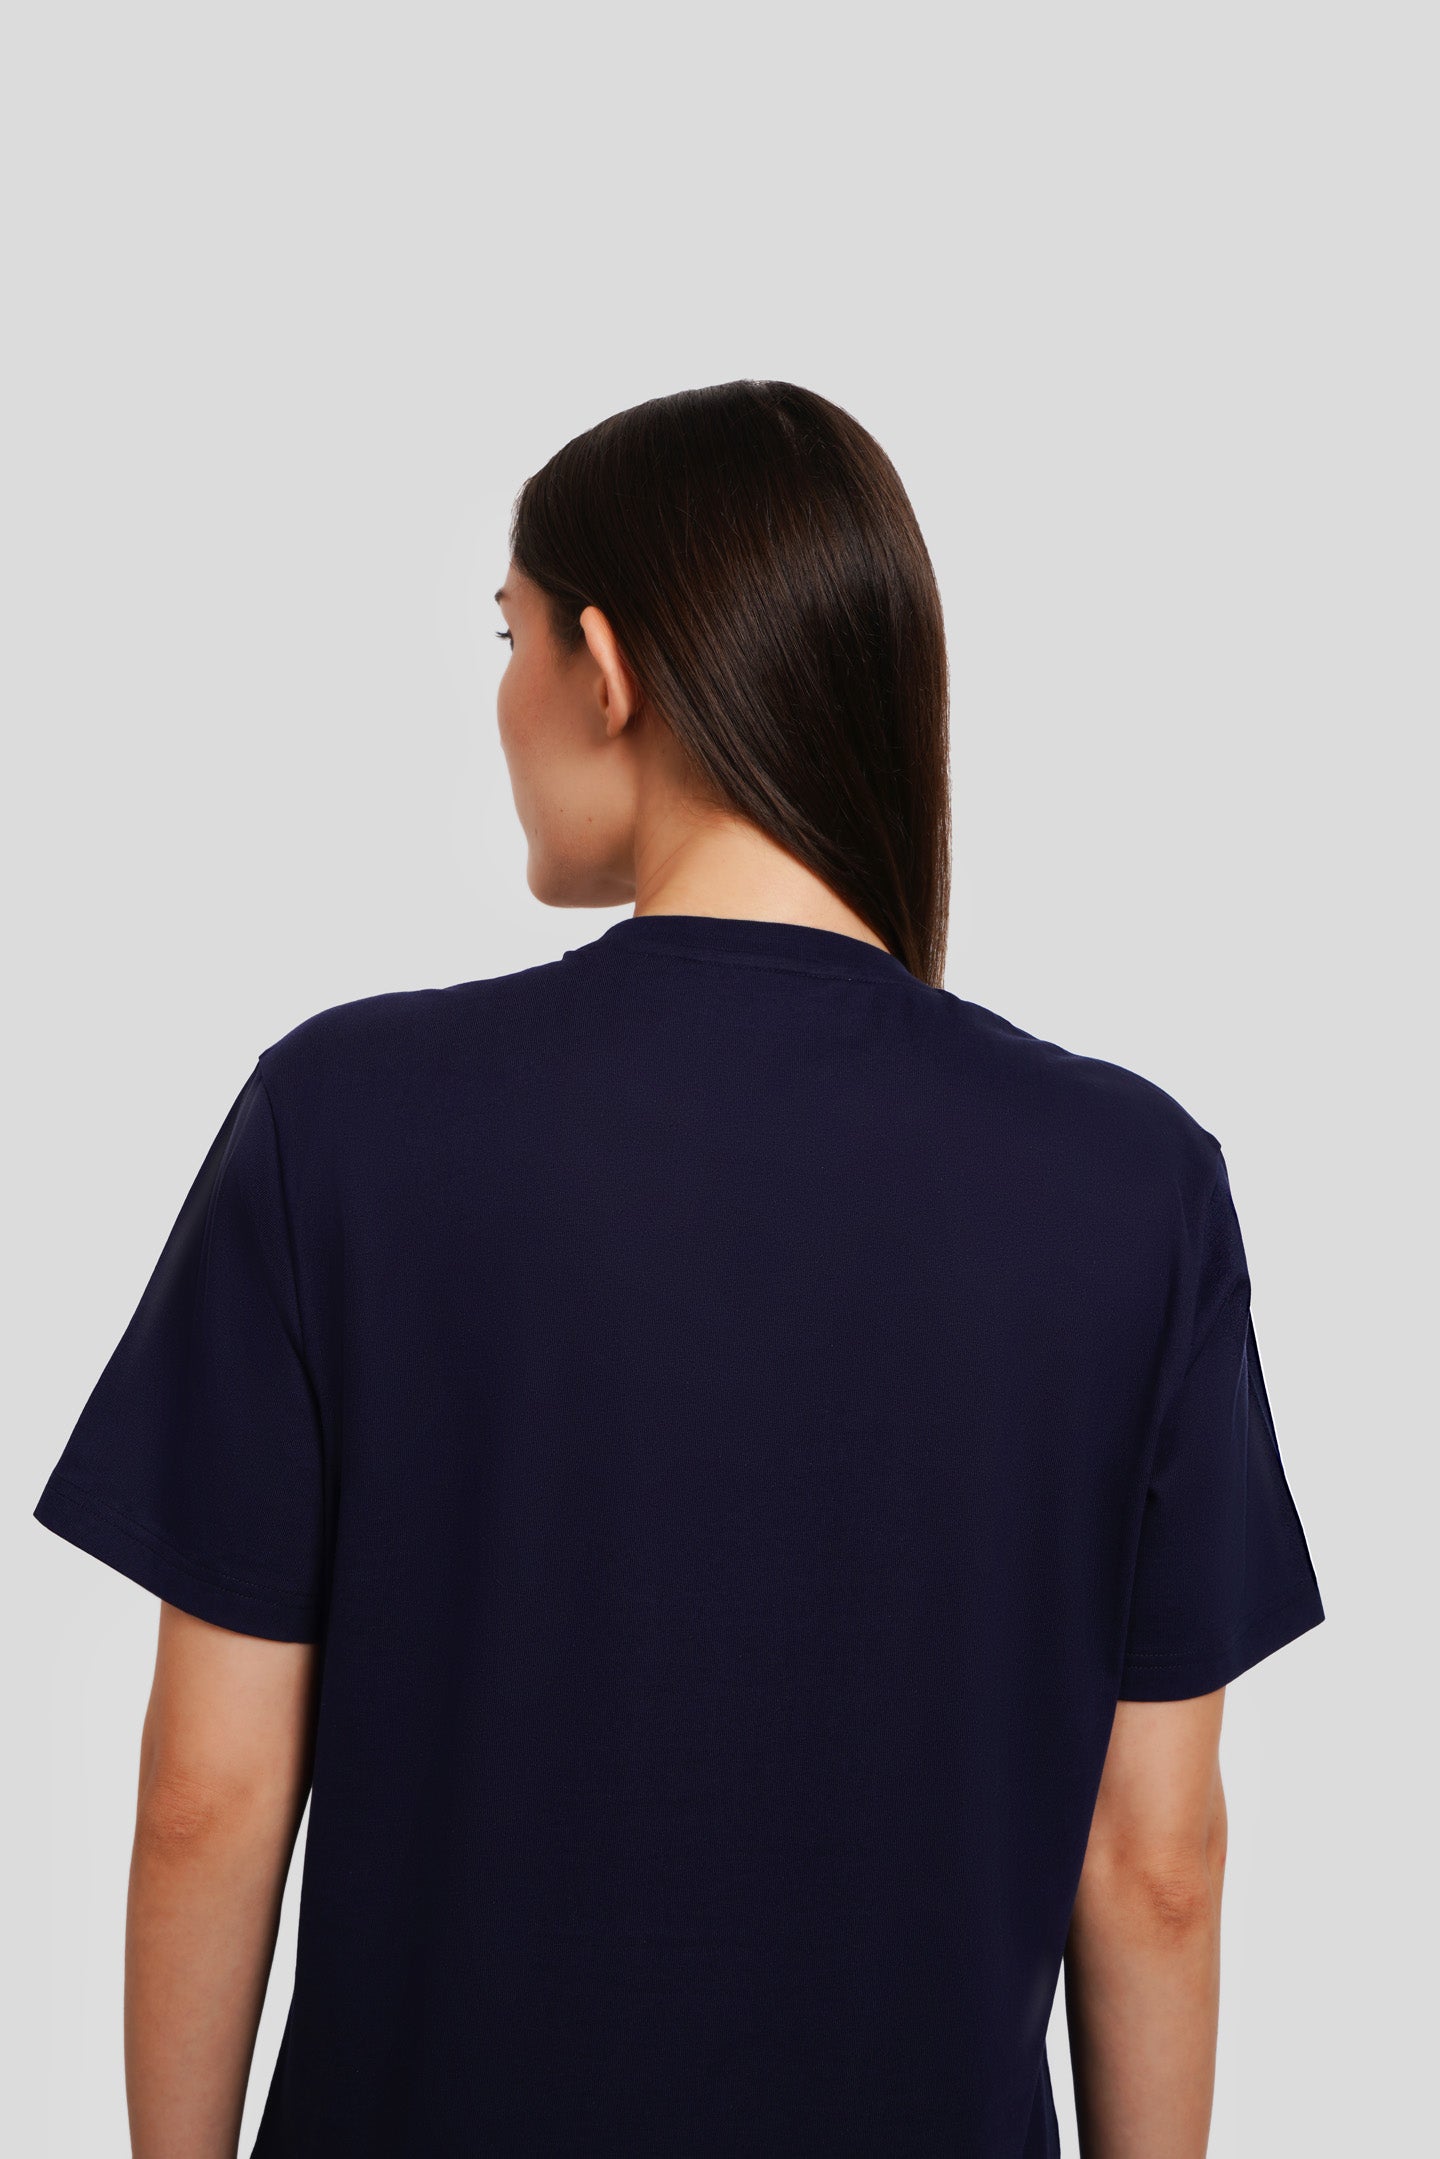 90 Gem Navy Blue Printed T Shirt Women Boyfriend Fit With Front Design Pic 2